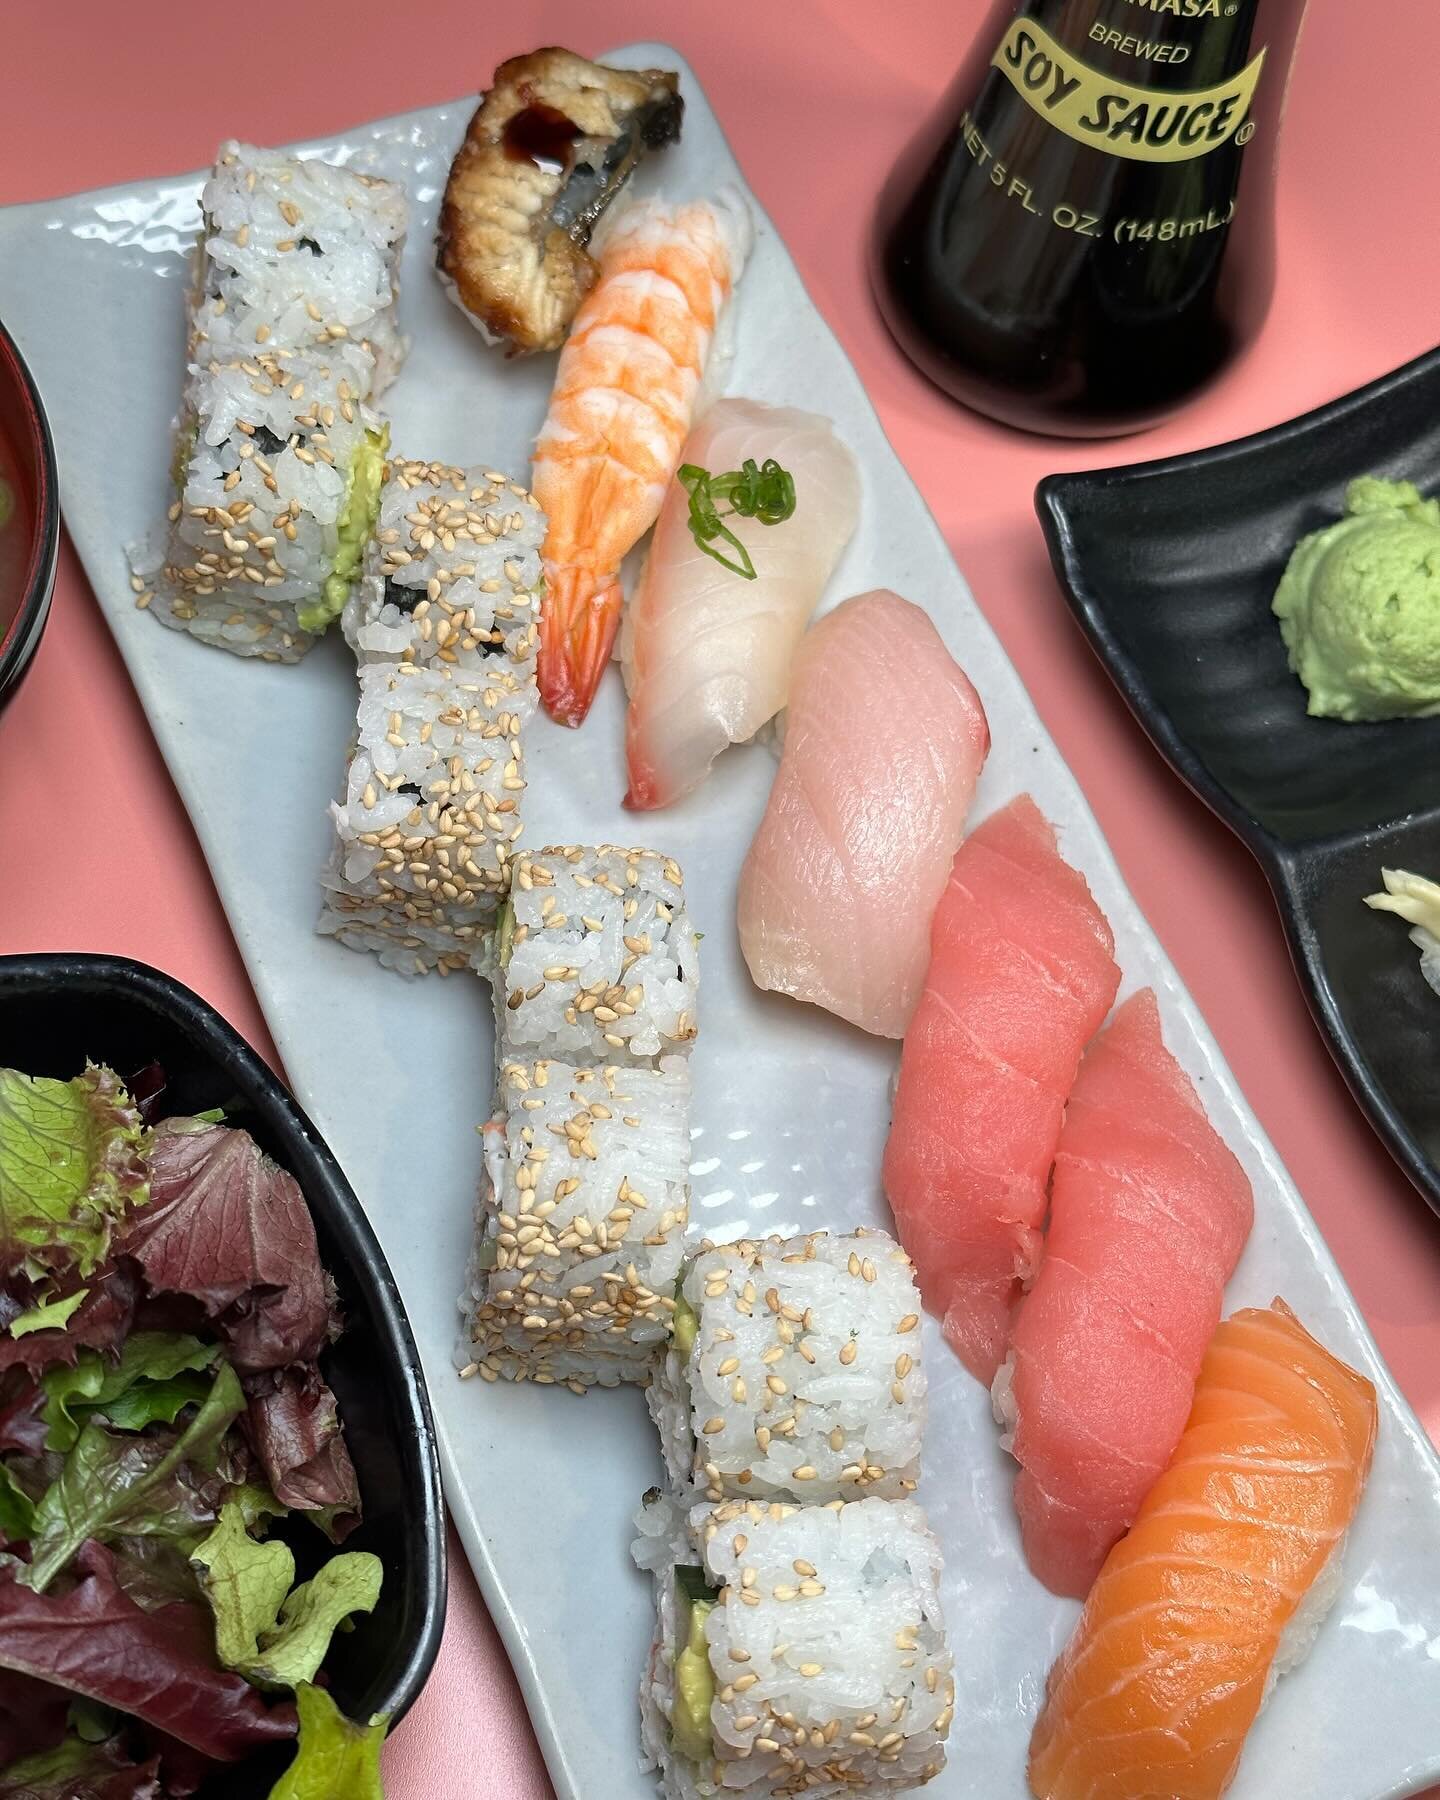 Treat yourself to the pure delight of nigiri sushi! Visit us today! #UmamiJourney 🍣🌟 

◾◽◾◽◾◽◾◽◾◽
🍣 𝗔𝗬𝗖𝗘 𝗦𝗨𝗦𝗛𝗜 𝗠𝗢𝗡 𝗠𝗔𝗥𝗬𝗟𝗔𝗡𝗗
⏰ ᴅᴀɪʟʏ: 12:00 ᴘᴍ - 11:00 ᴘᴍ
⏰ ʟᴀꜱᴛ ꜱᴇᴀᴛɪɴɢ ꜰᴏʀ ᴀʏᴄᴇ 10ᴘᴍ
⏰ ʟᴀꜱᴛᴏʀᴅᴇʀ10:30ᴘᴍ 
📍 9770 ꜱ ᴍᴀʀʏʟᴀɴᴅ ᴘᴋᴡʏ, 